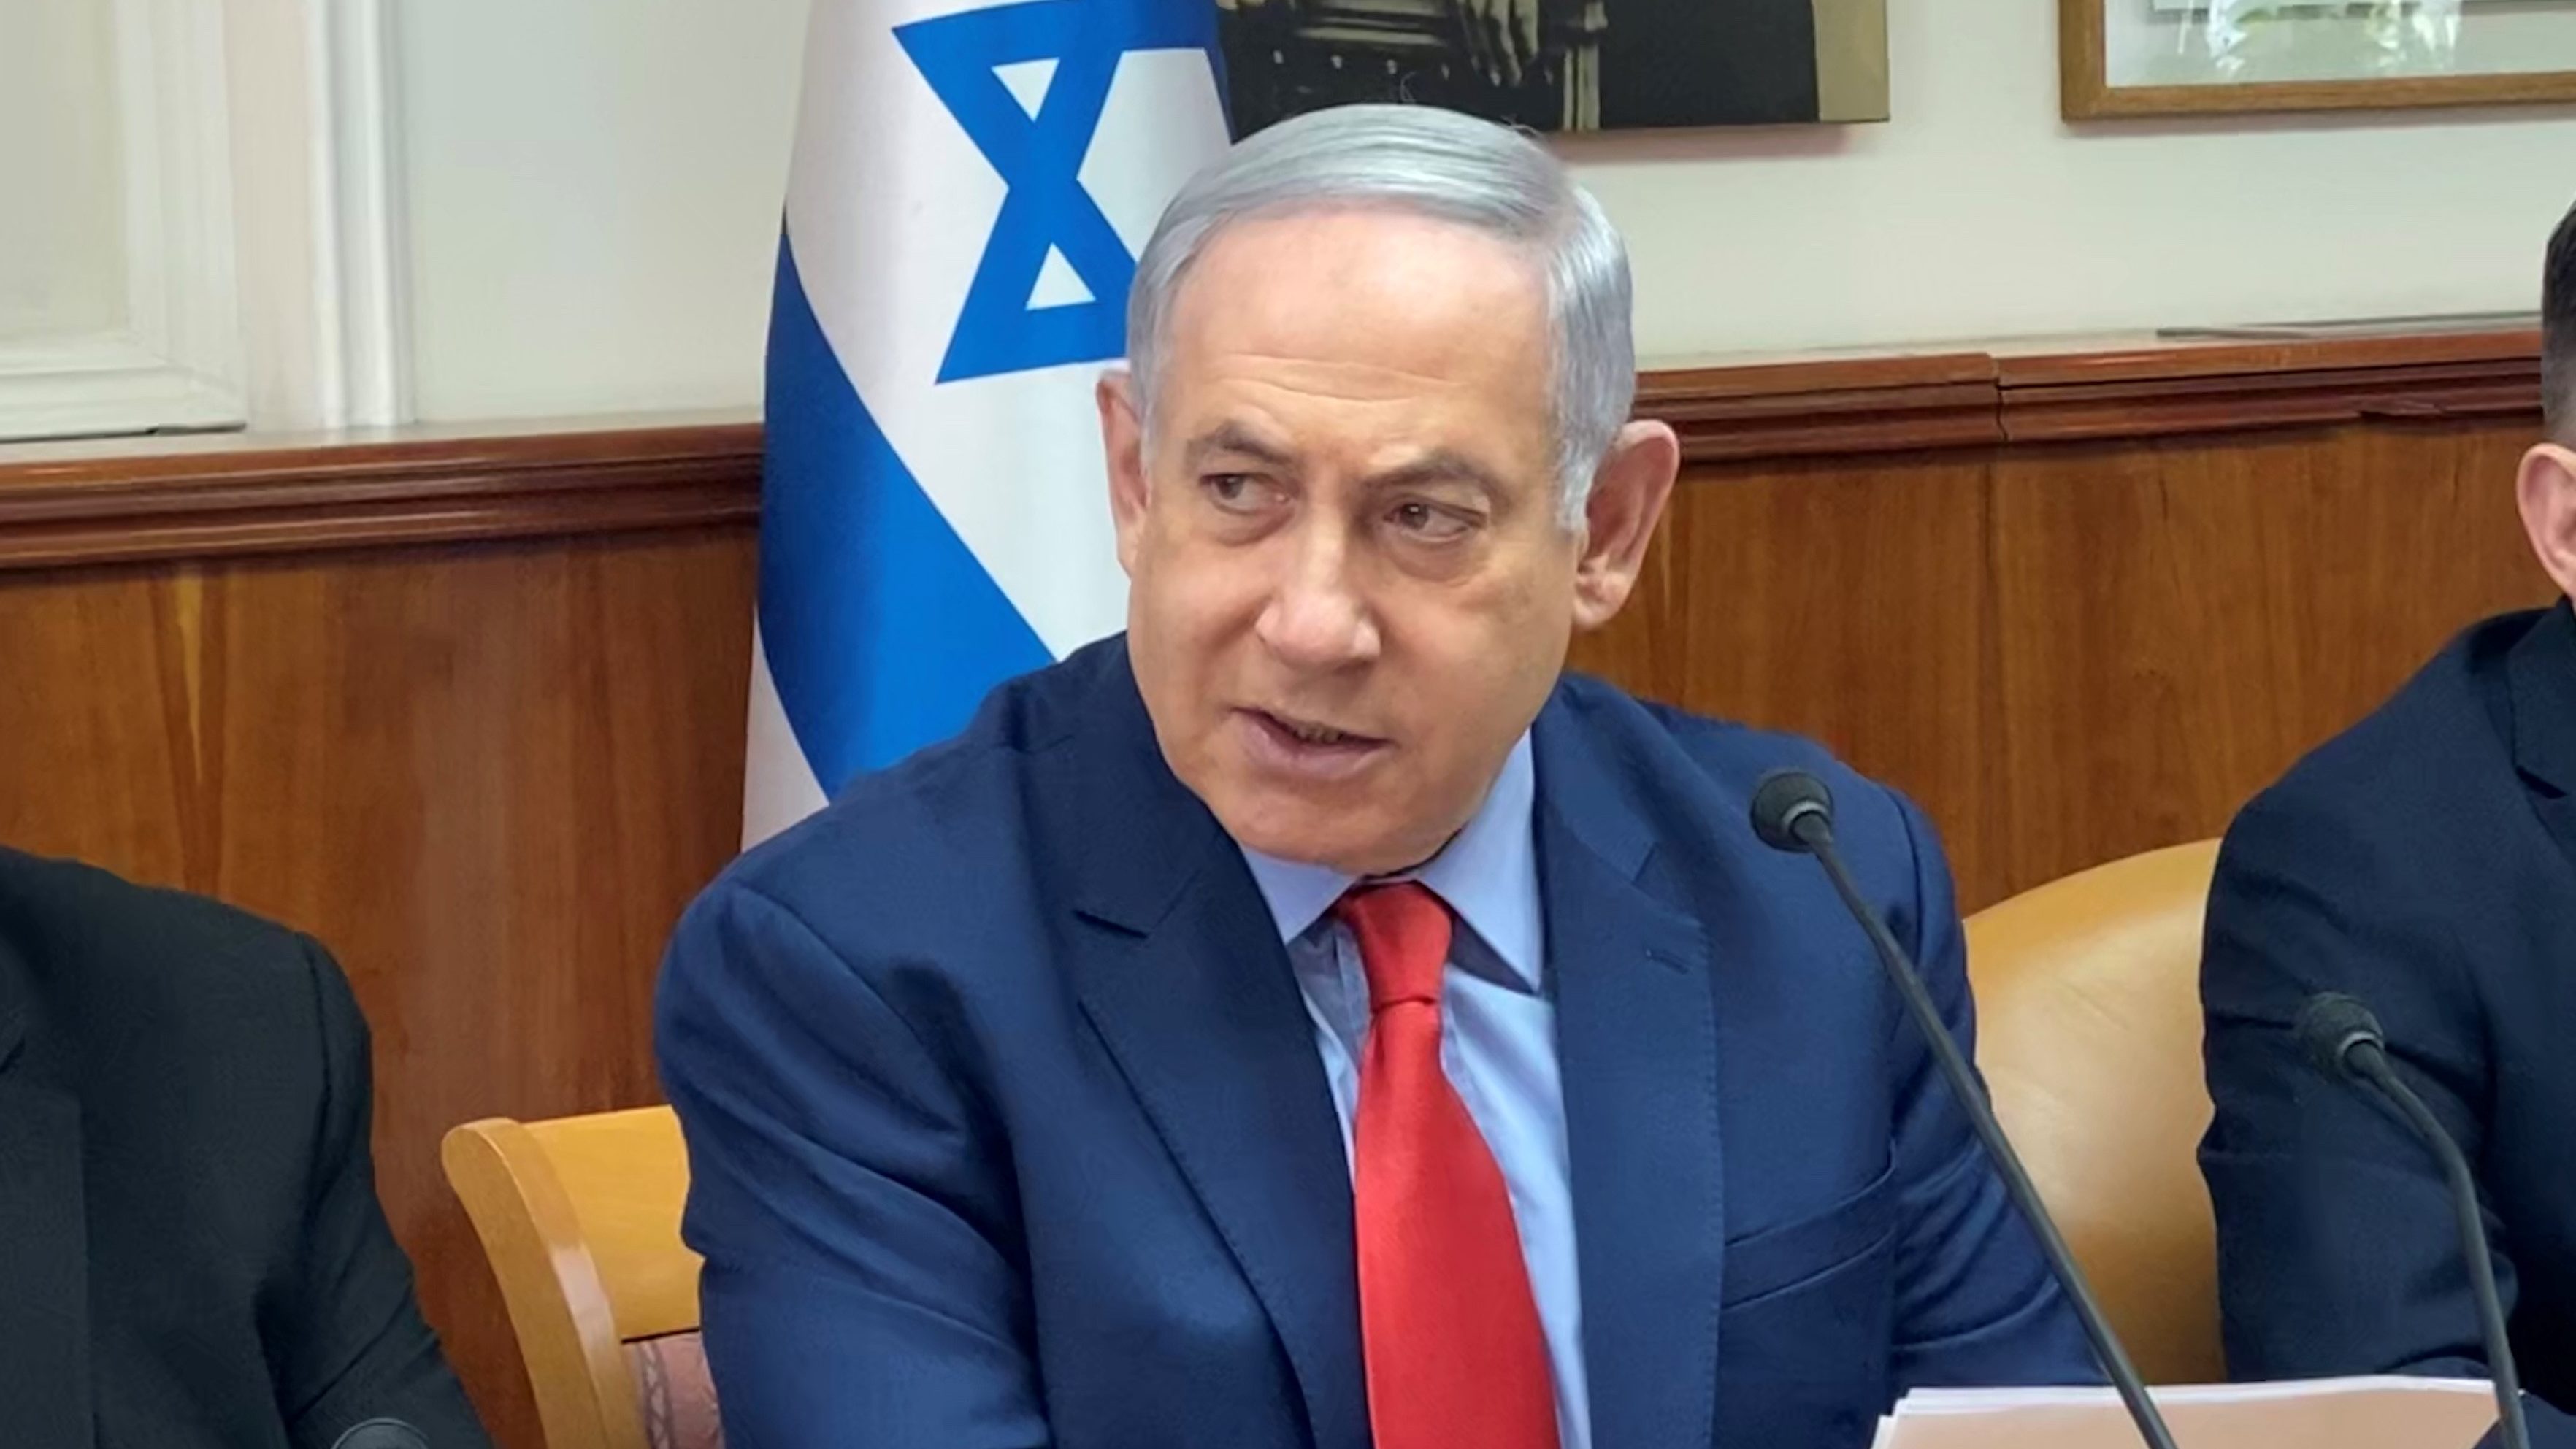 Netanyahu Berates Israelis as Country’s Coronavirus Cases Spike